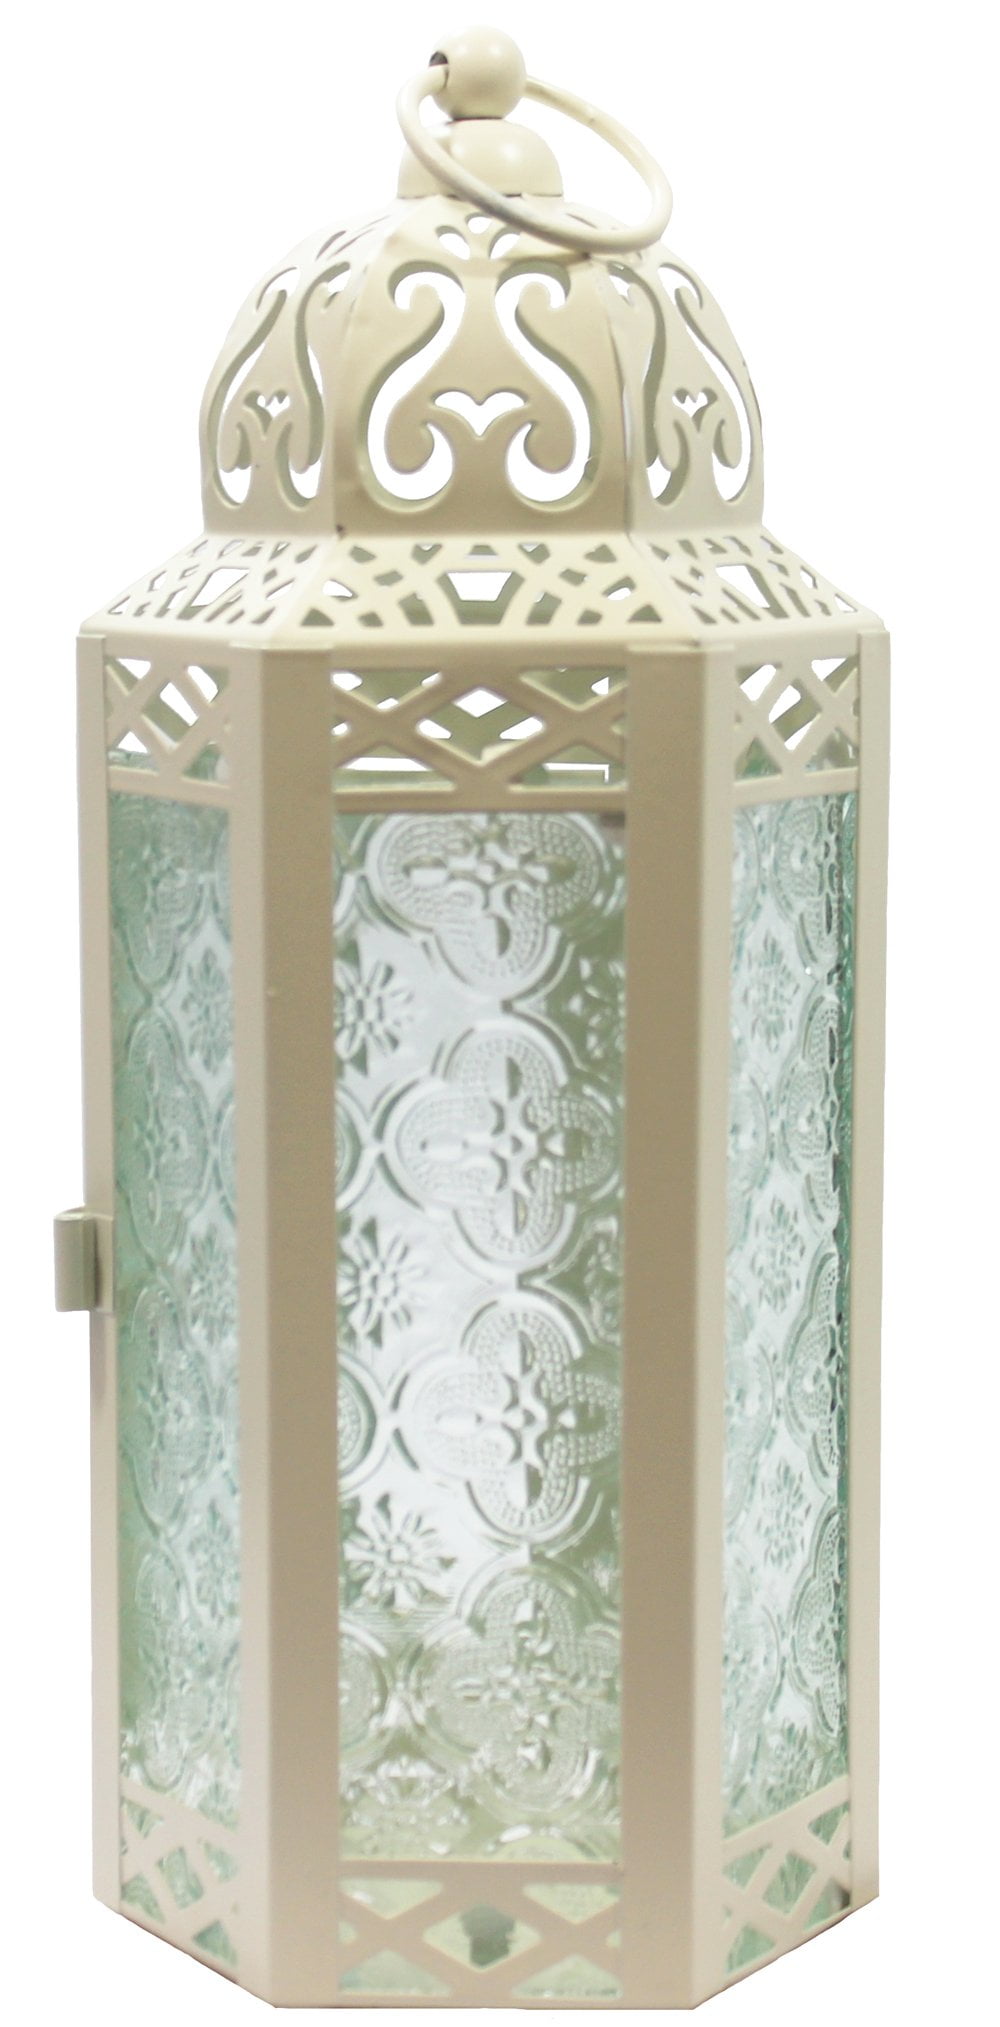 Details about   3 lot White Lantern 12 inches Candle Holder Wedding Garden Centerpiece Gift 